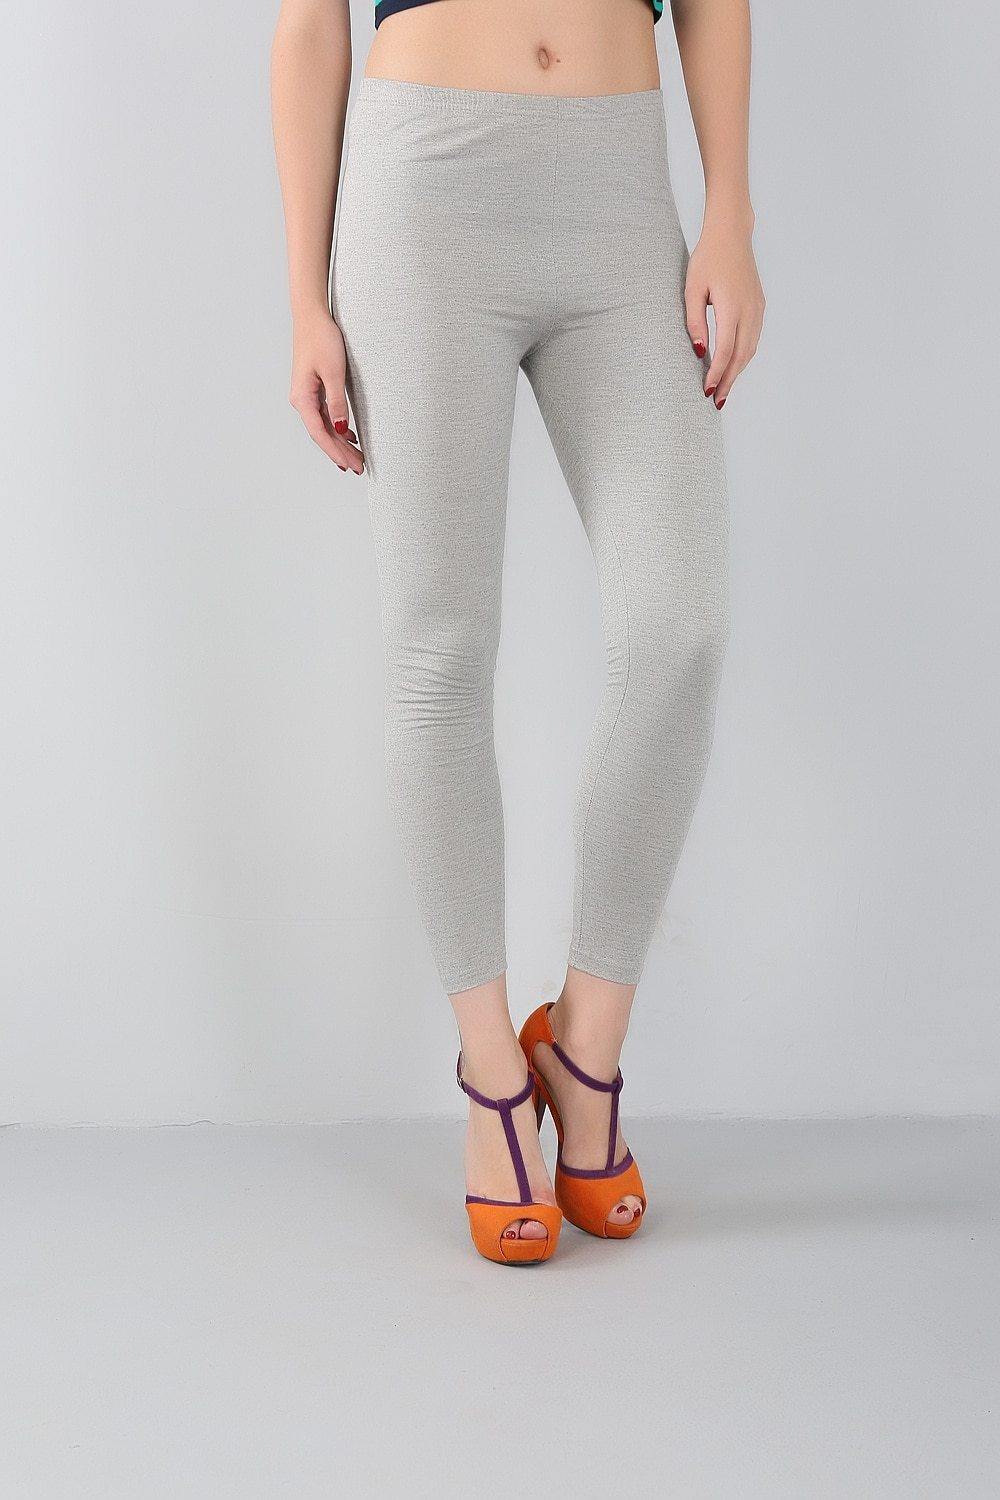 Solid Color Fashion Leggings plus size 2XL-6xl 7XL - L & M Kee, LLC